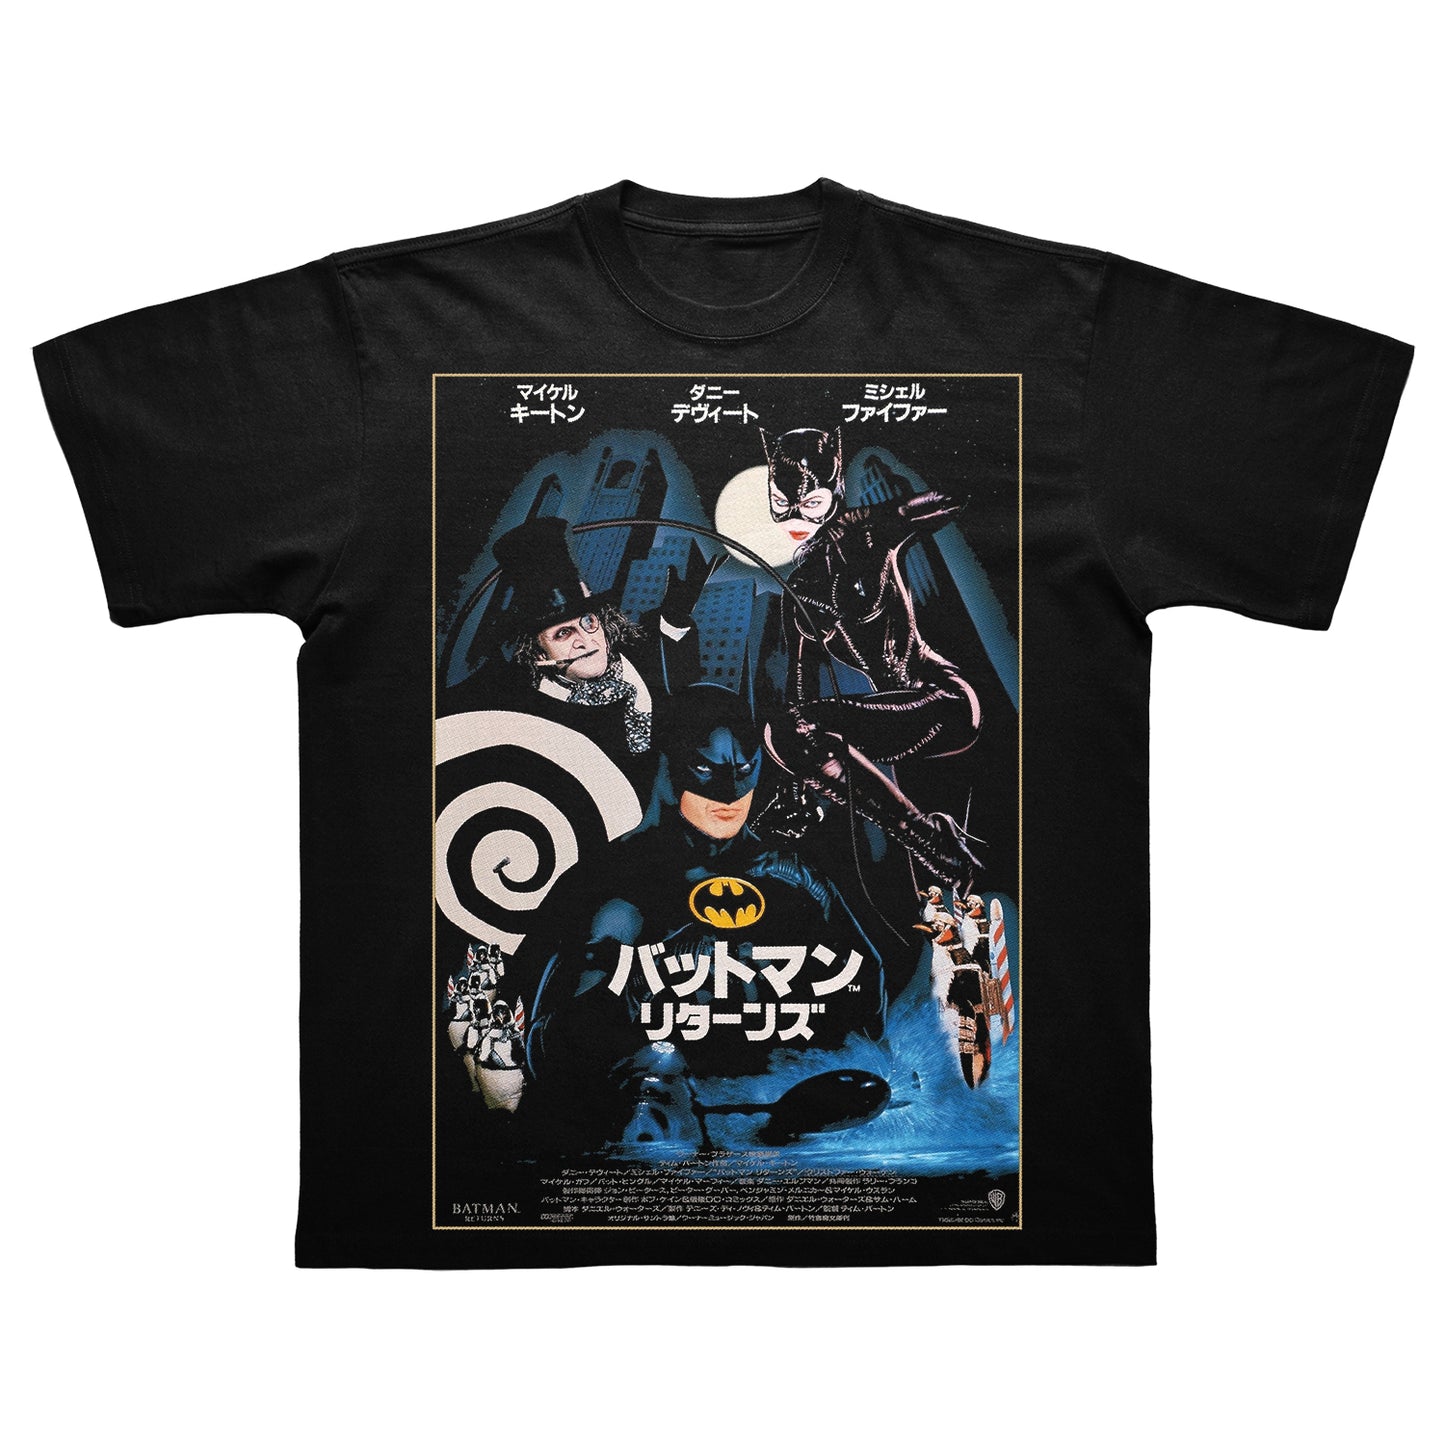 Japanese Thrift Find: The Bat Returns Movie Promotion Shirt